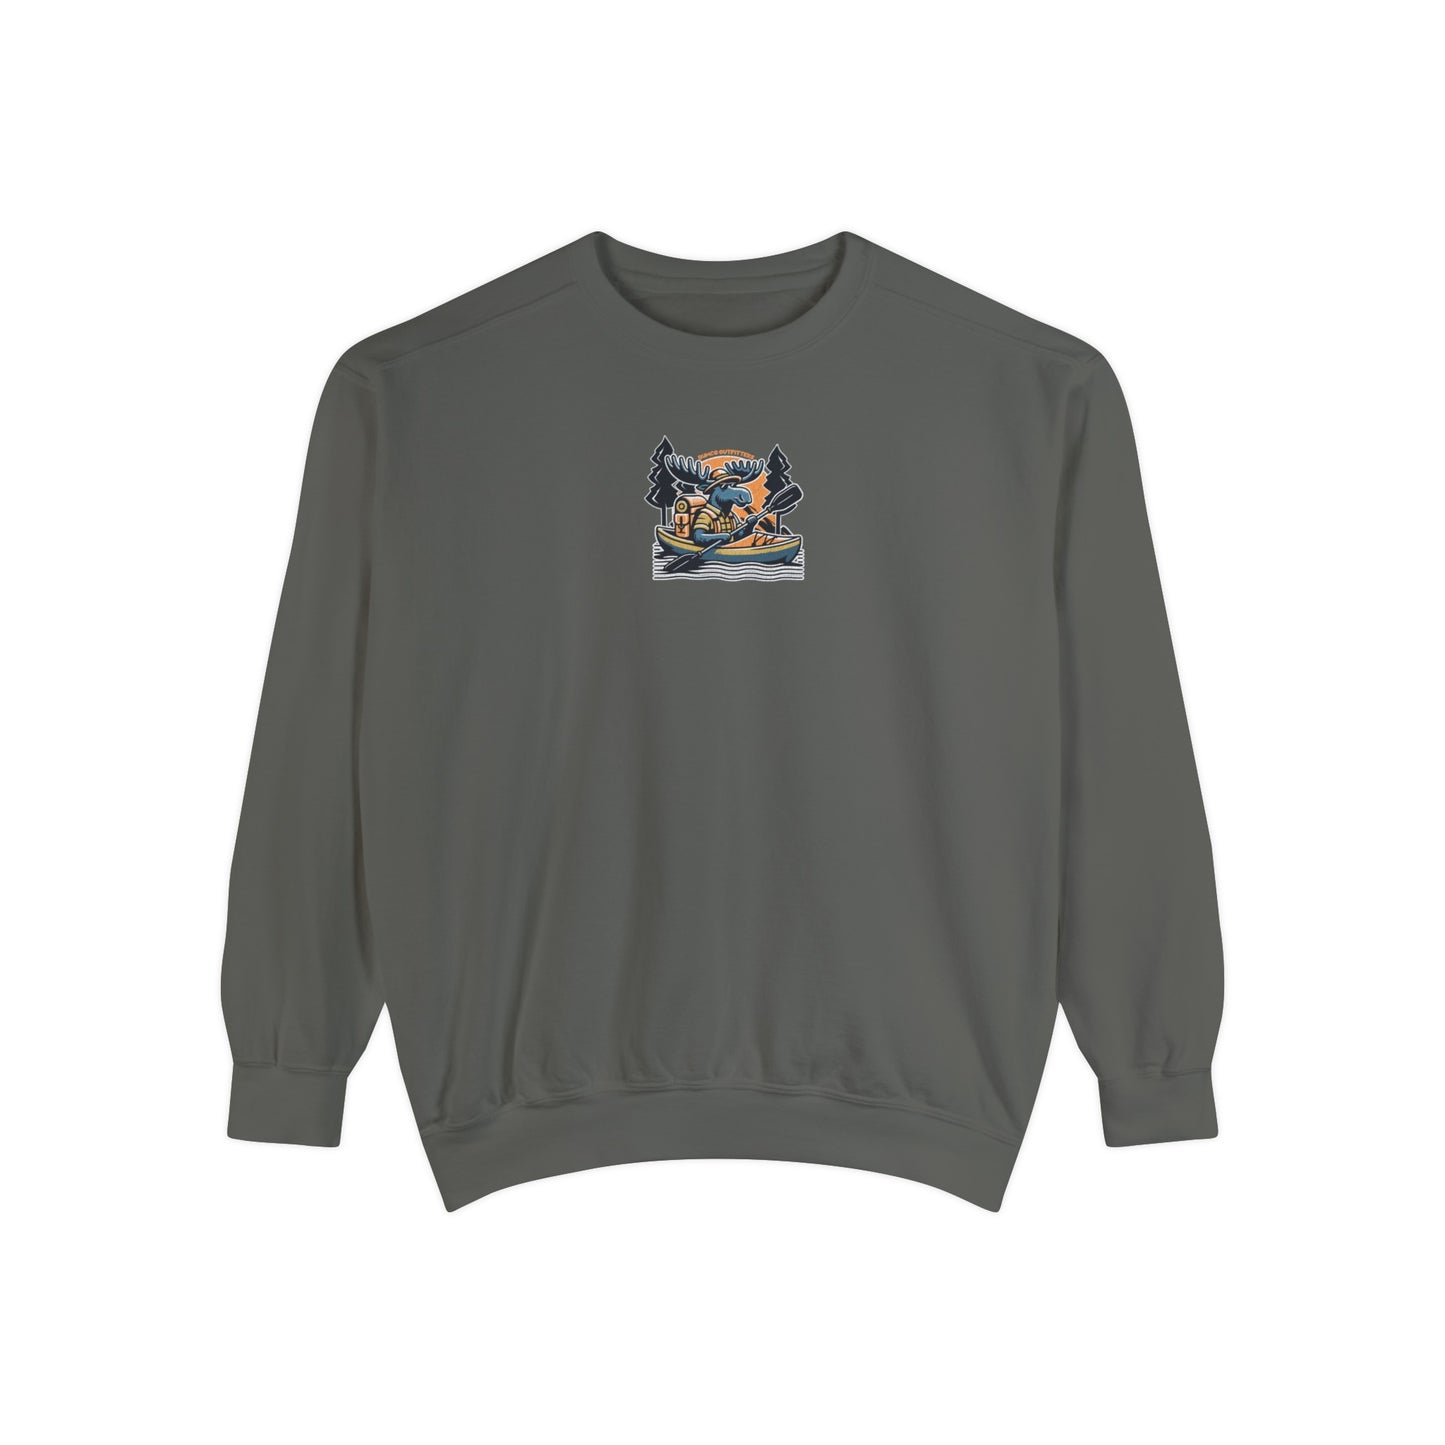 Keep it Rowing - Crewneck Sweatshirt